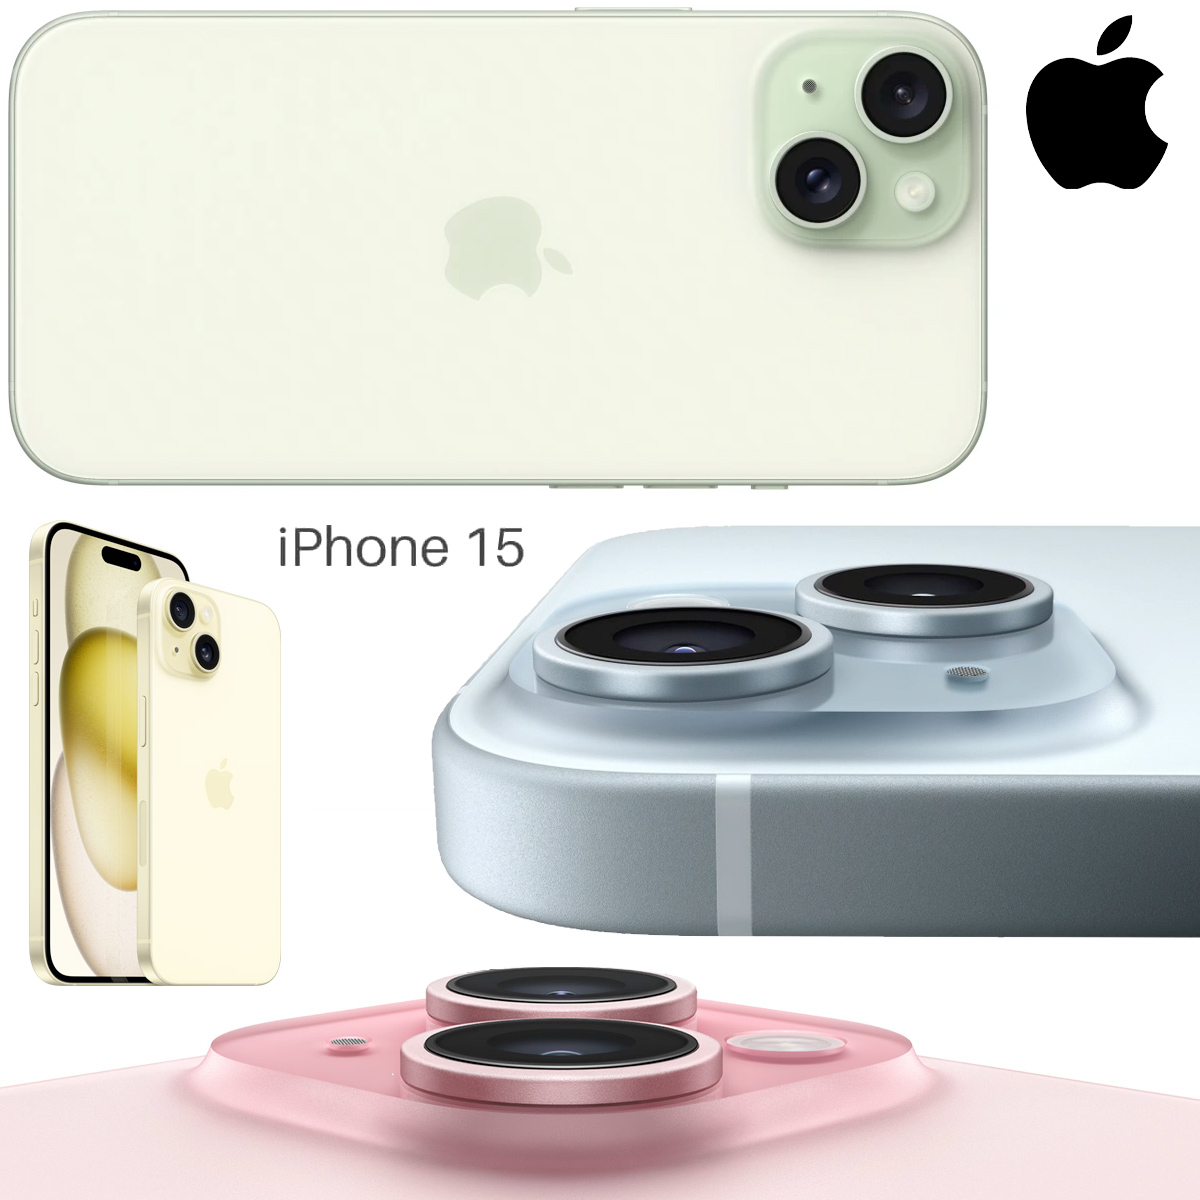 iPhone 15 e iPhone 15 Plus